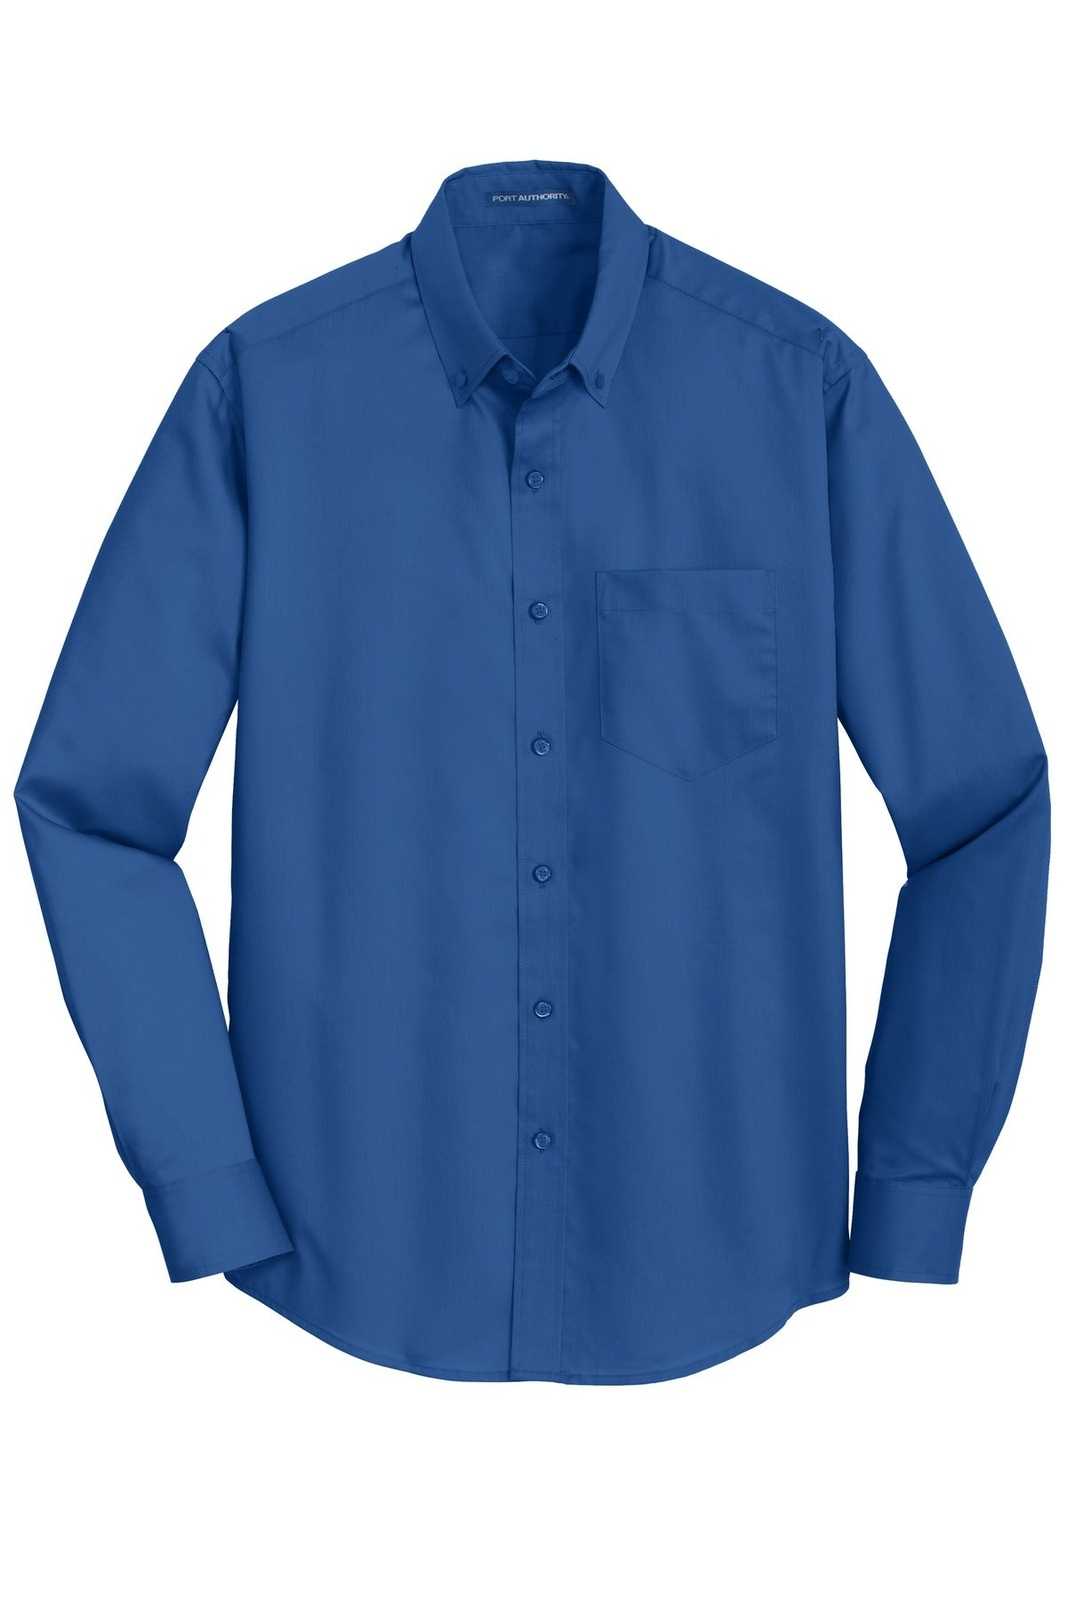 Port Authority TS663 Tall Superpro Twill Shirt - True Blue - HIT a Double - 5